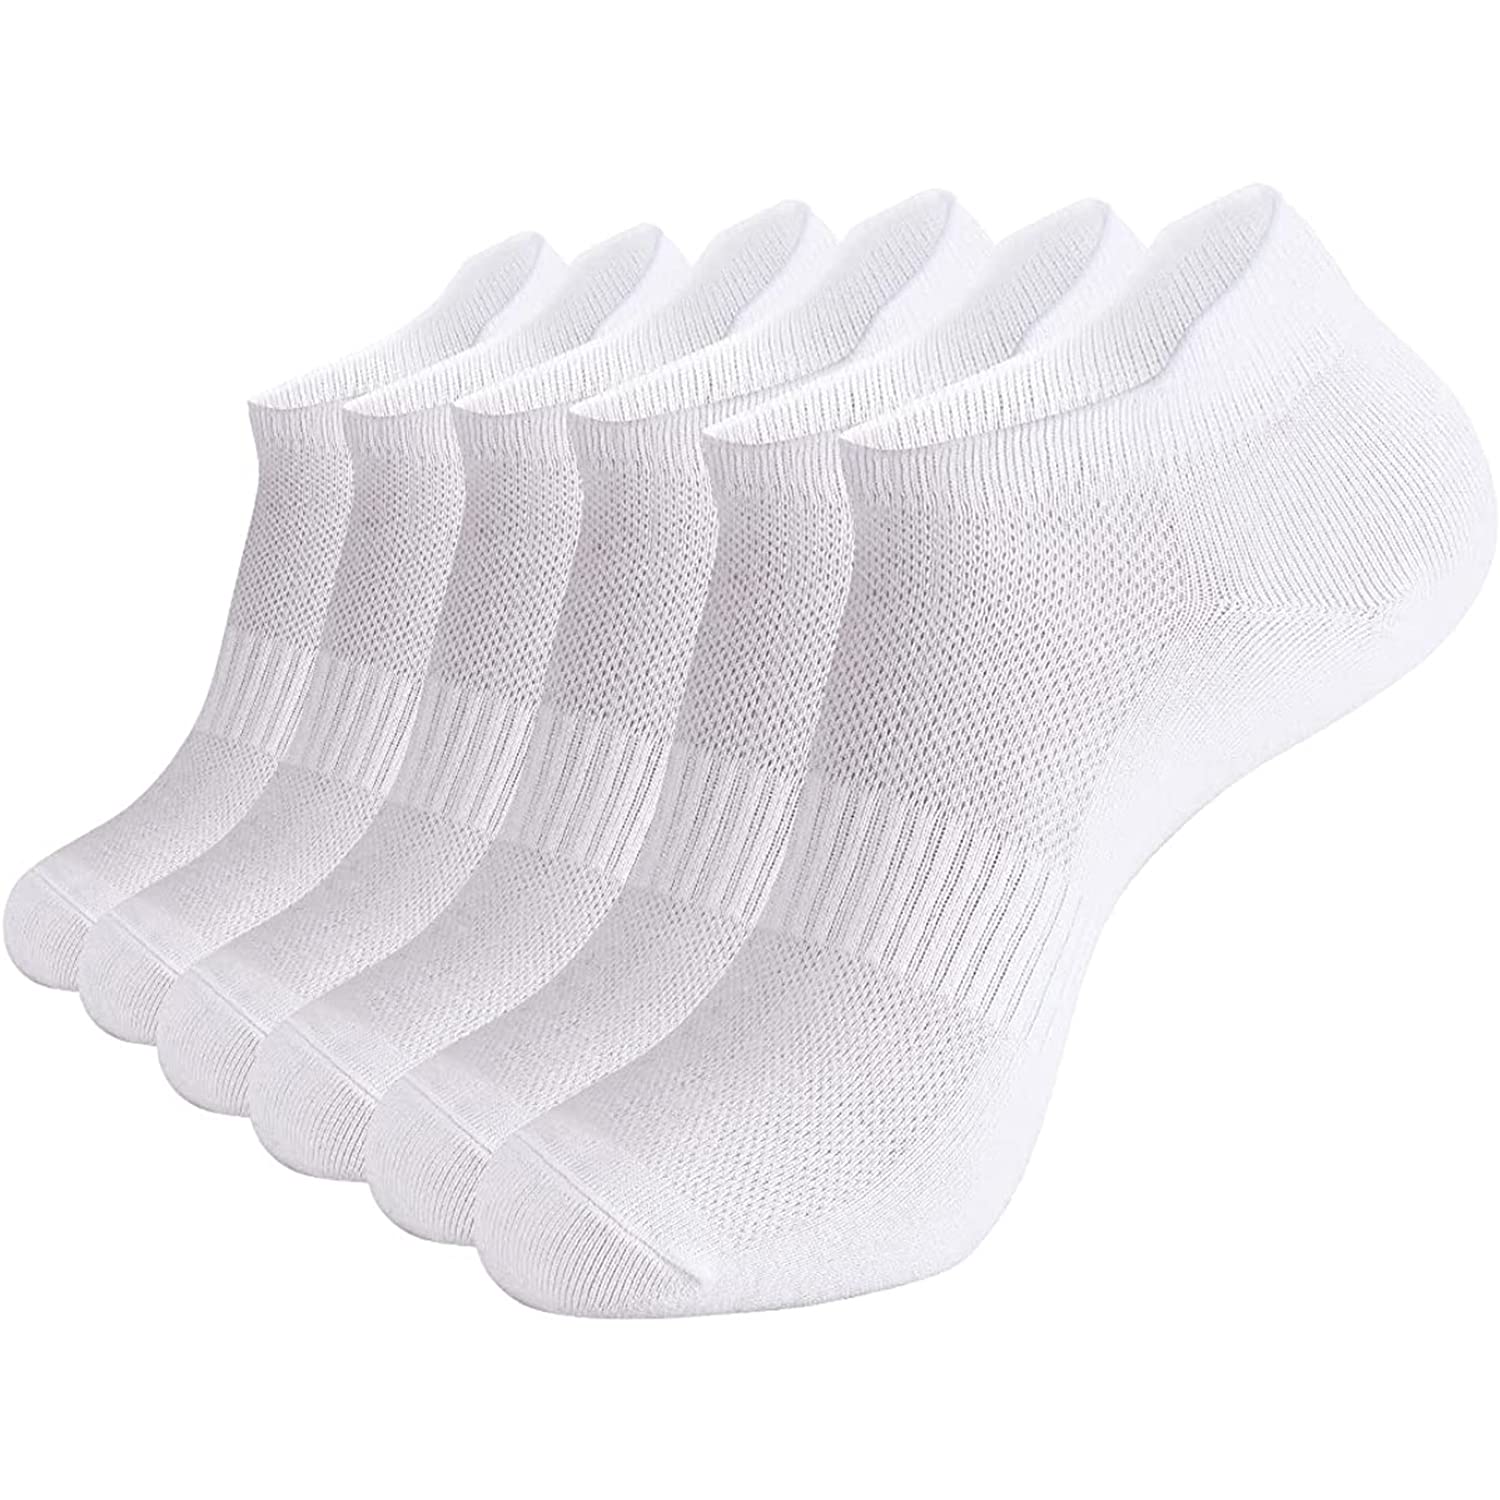 6 Pair Women Ankle Socks Low Cut Fit Crew Size 9-11 Sport Black White Grey  